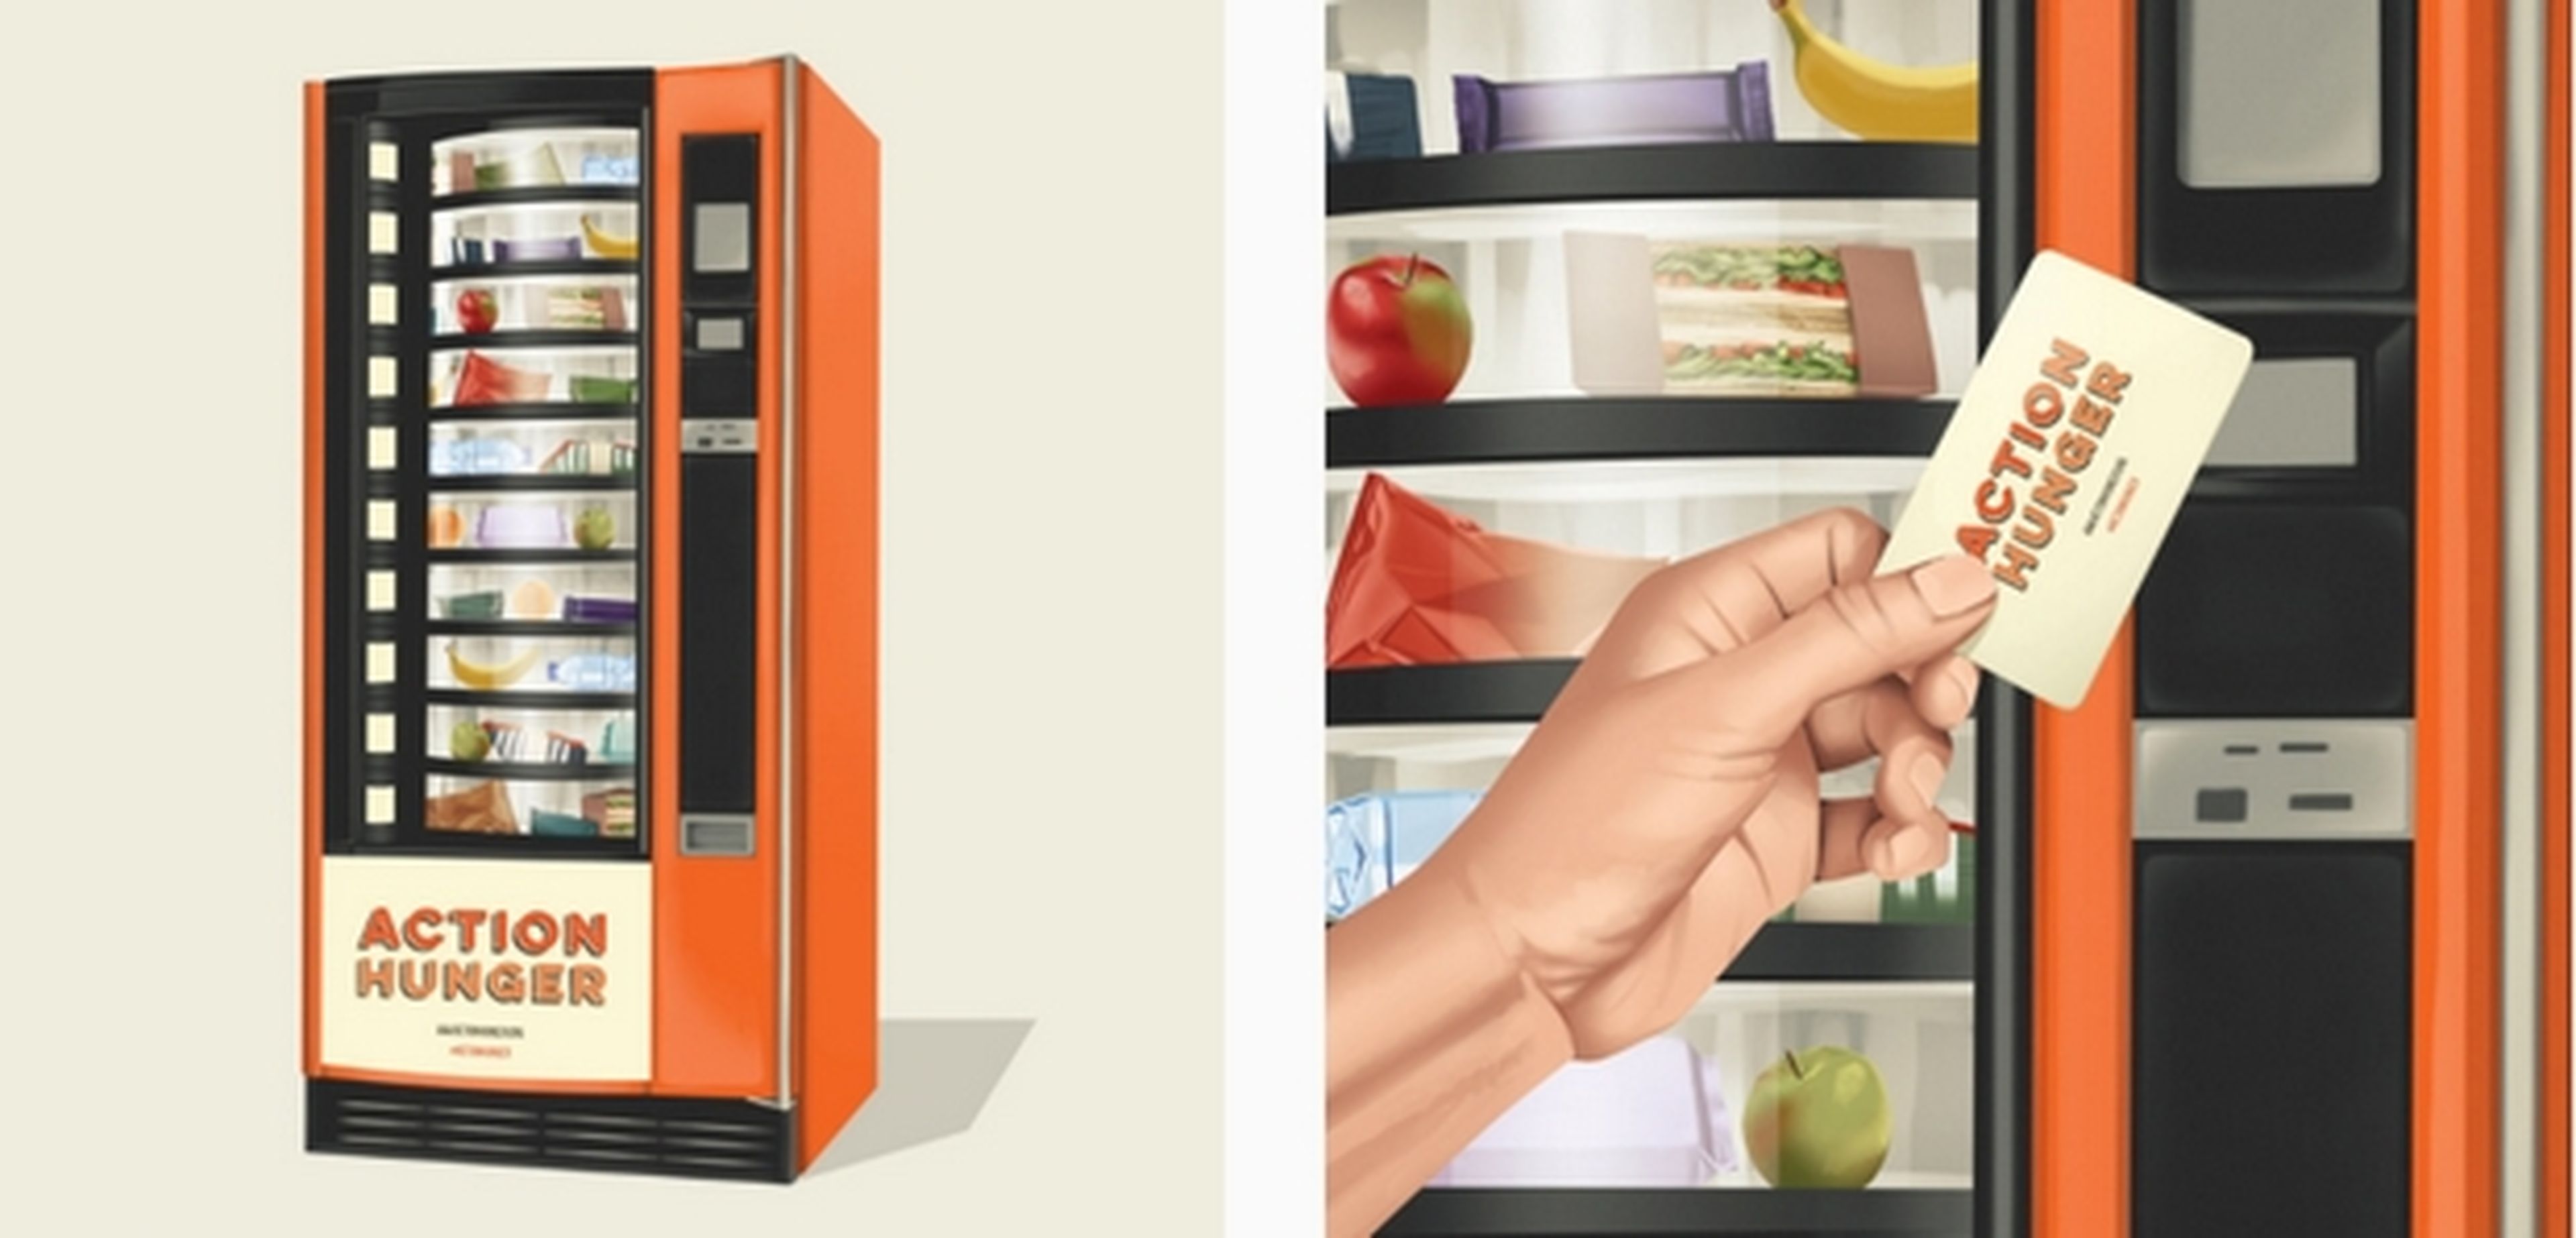 Esta máquina expendedora para indigentes ofrece comida gratis